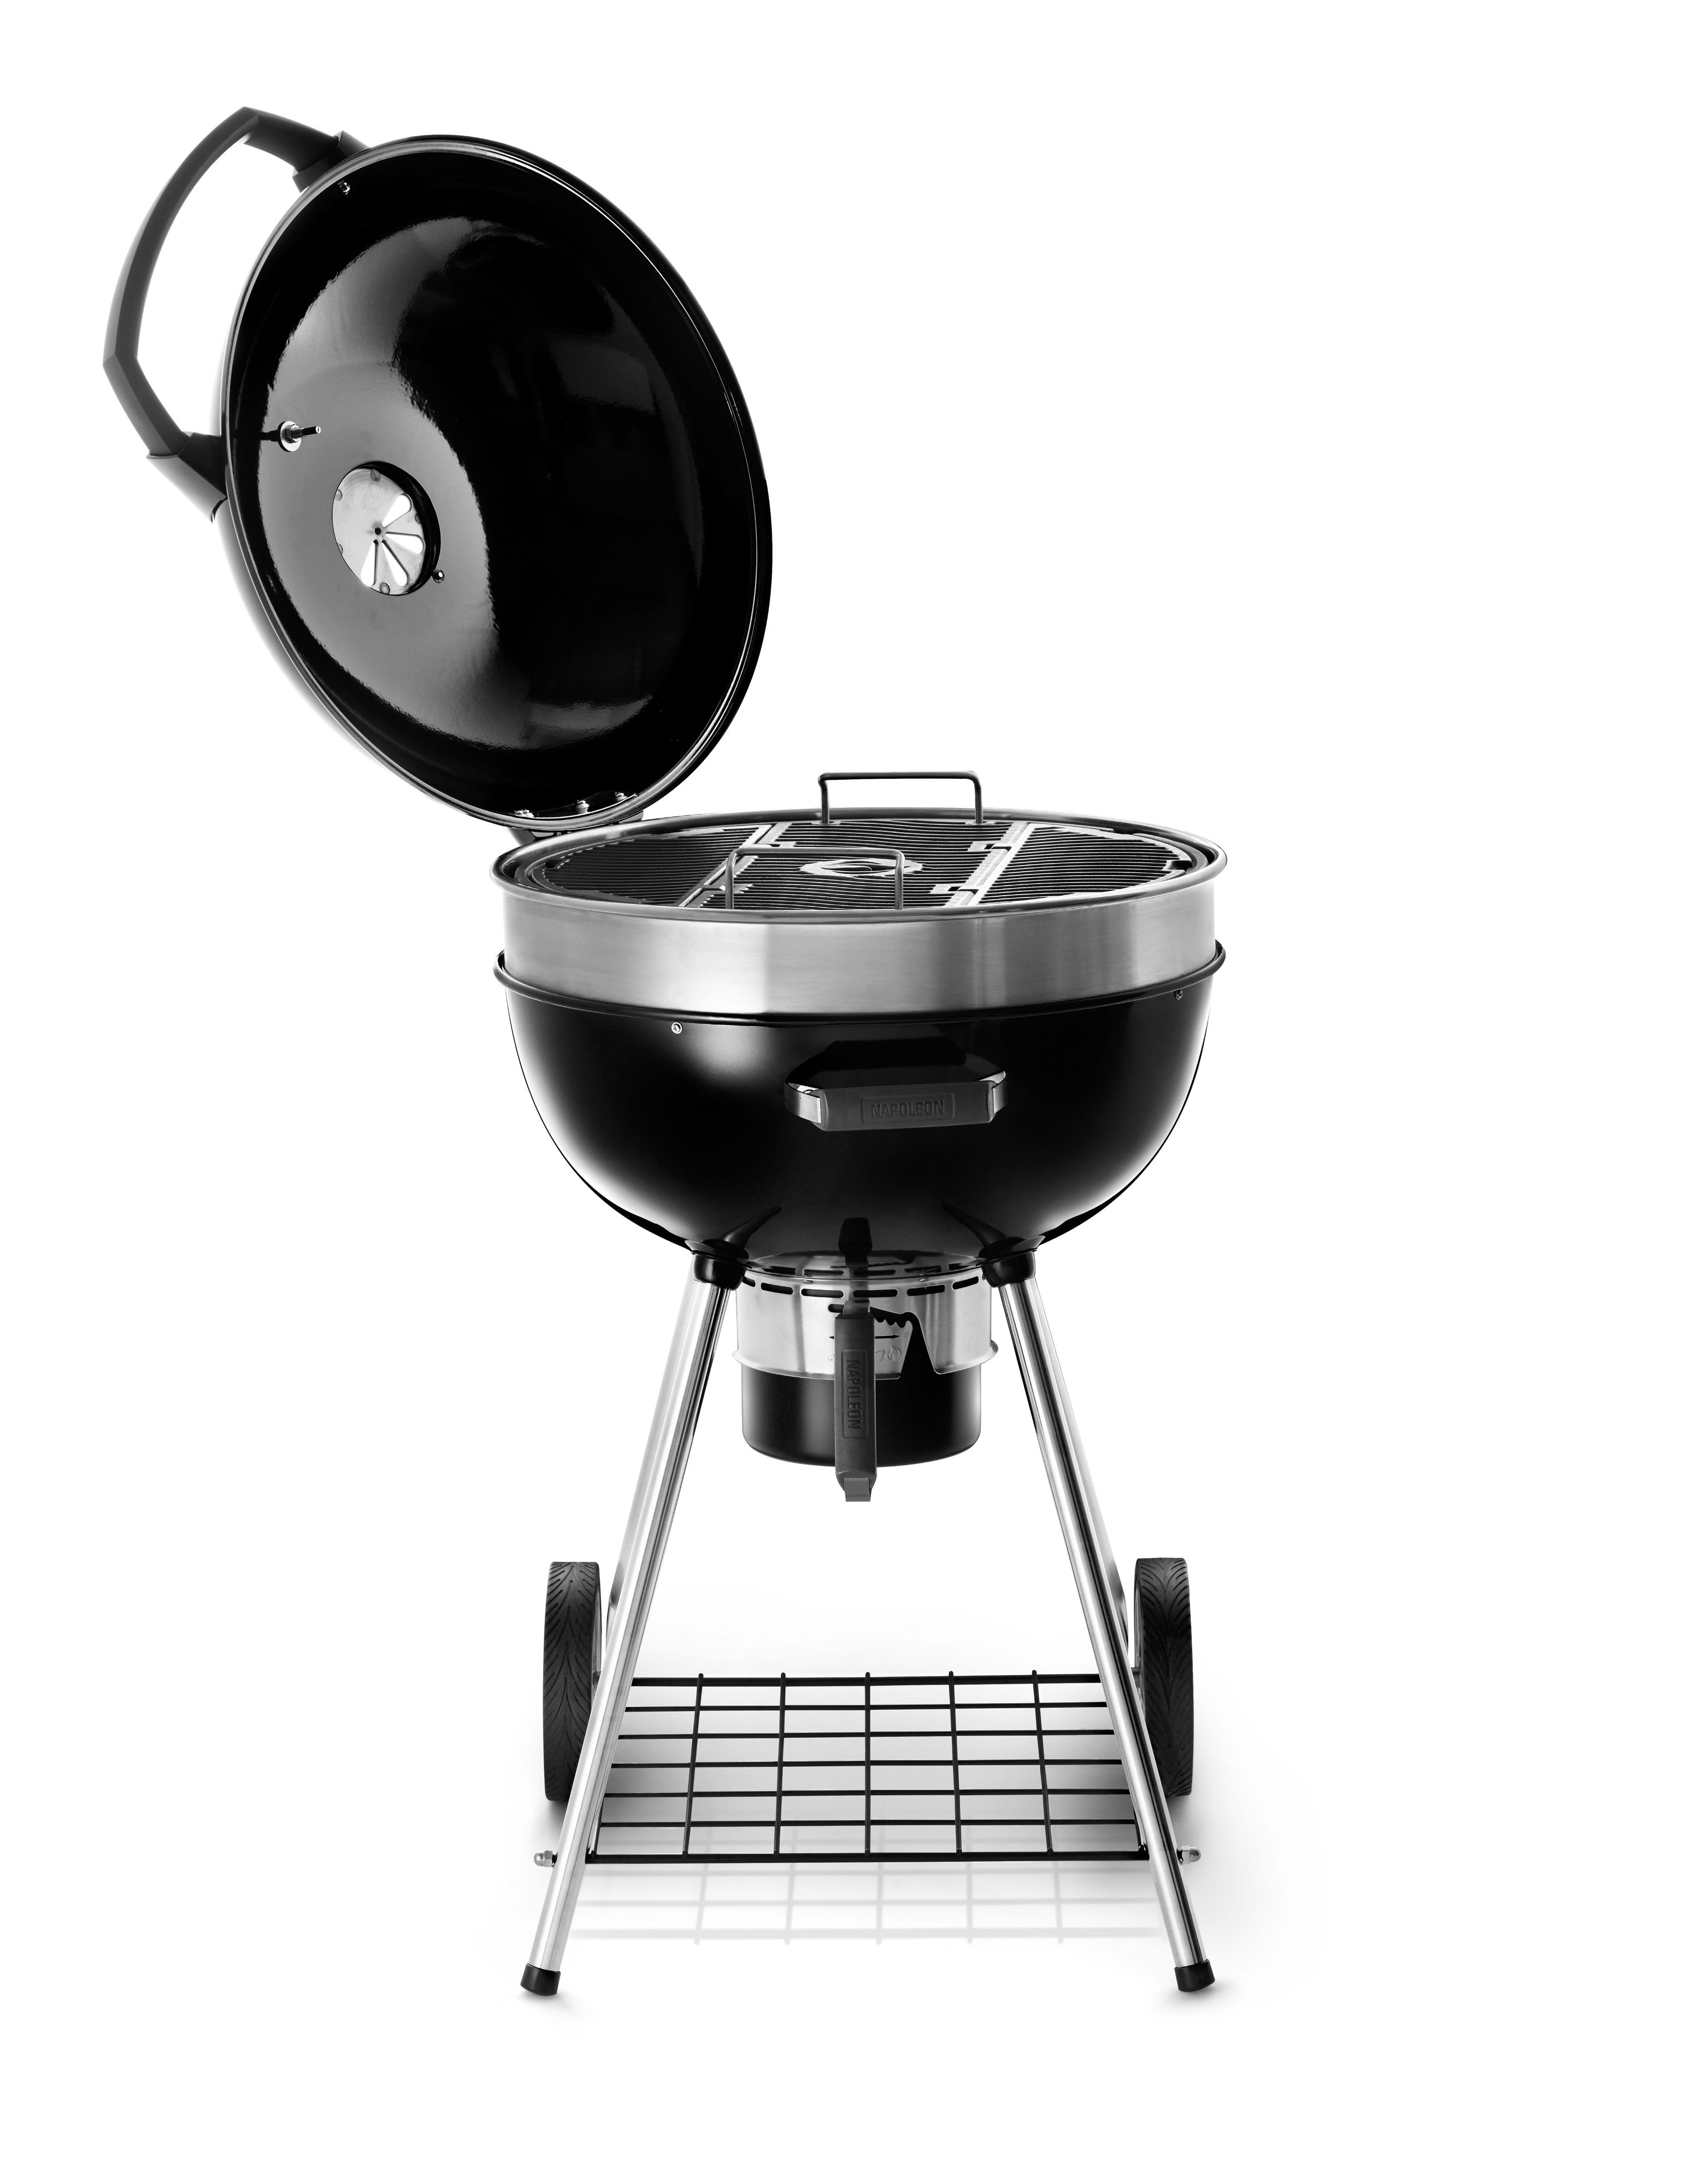 bbq-toro grill spit set 57cm kettle